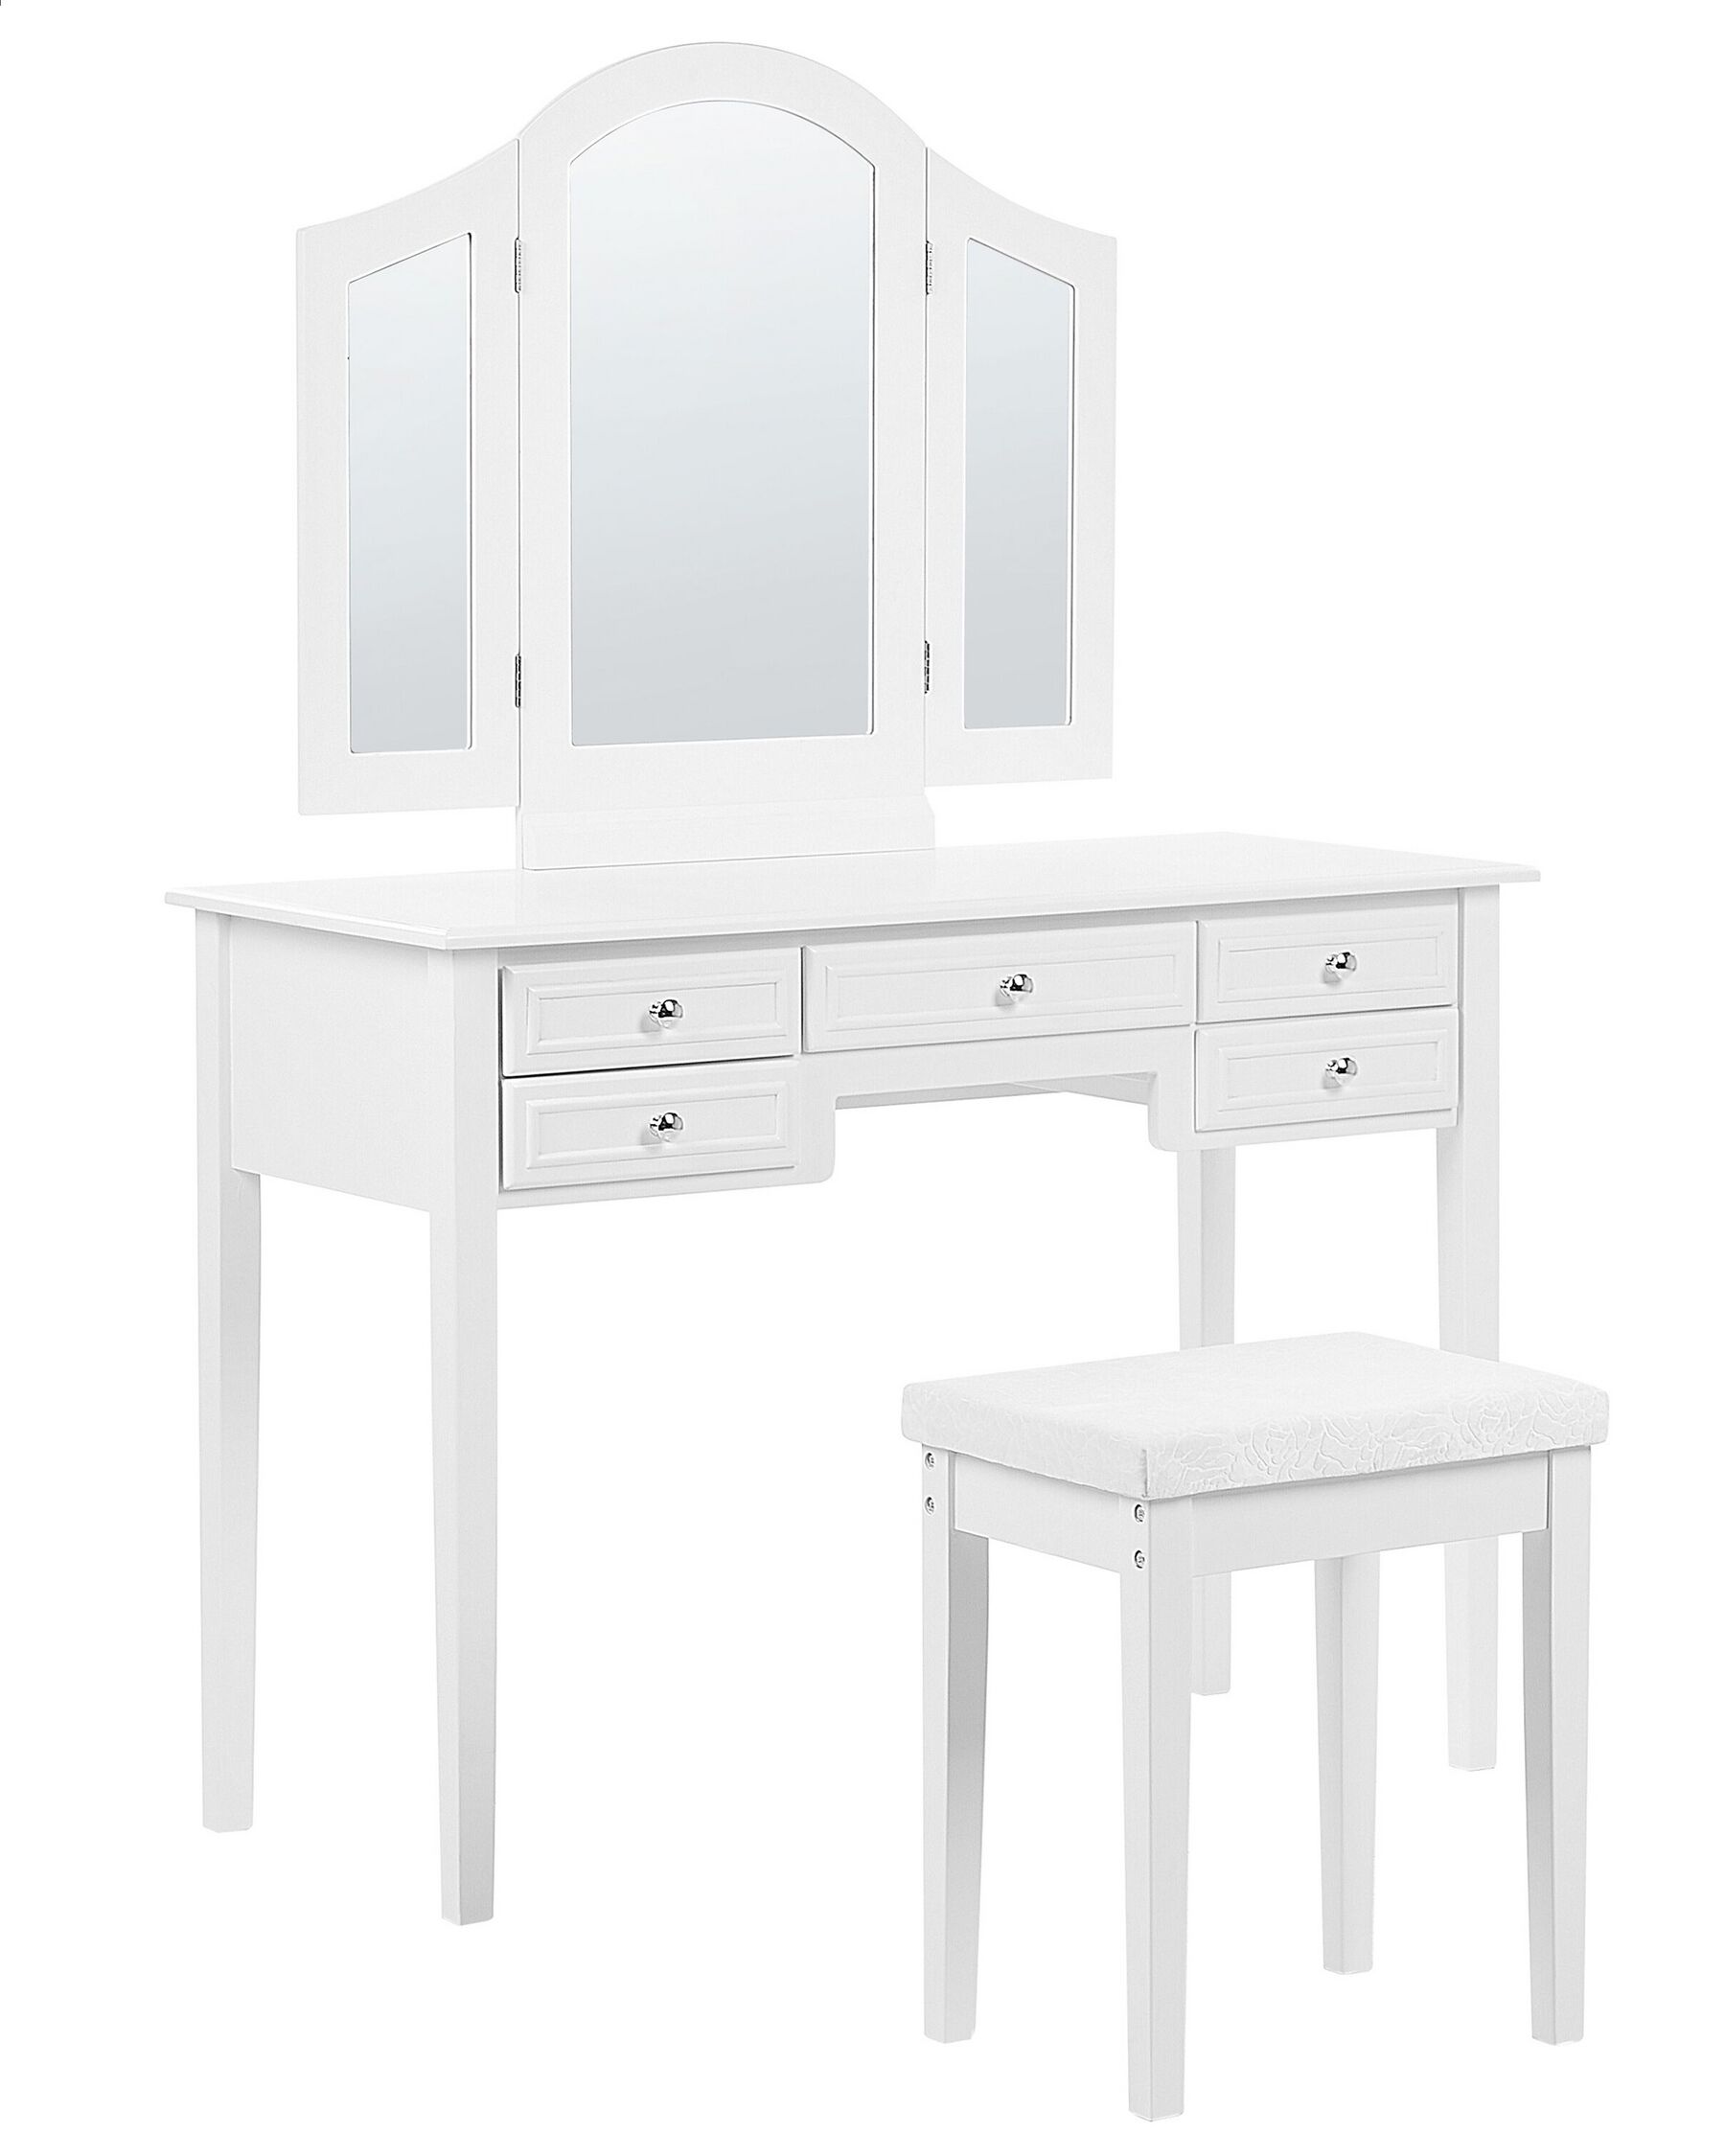 Toaletní stolek se zásuvkami a zrcadlem bílý LUMIERE_827332